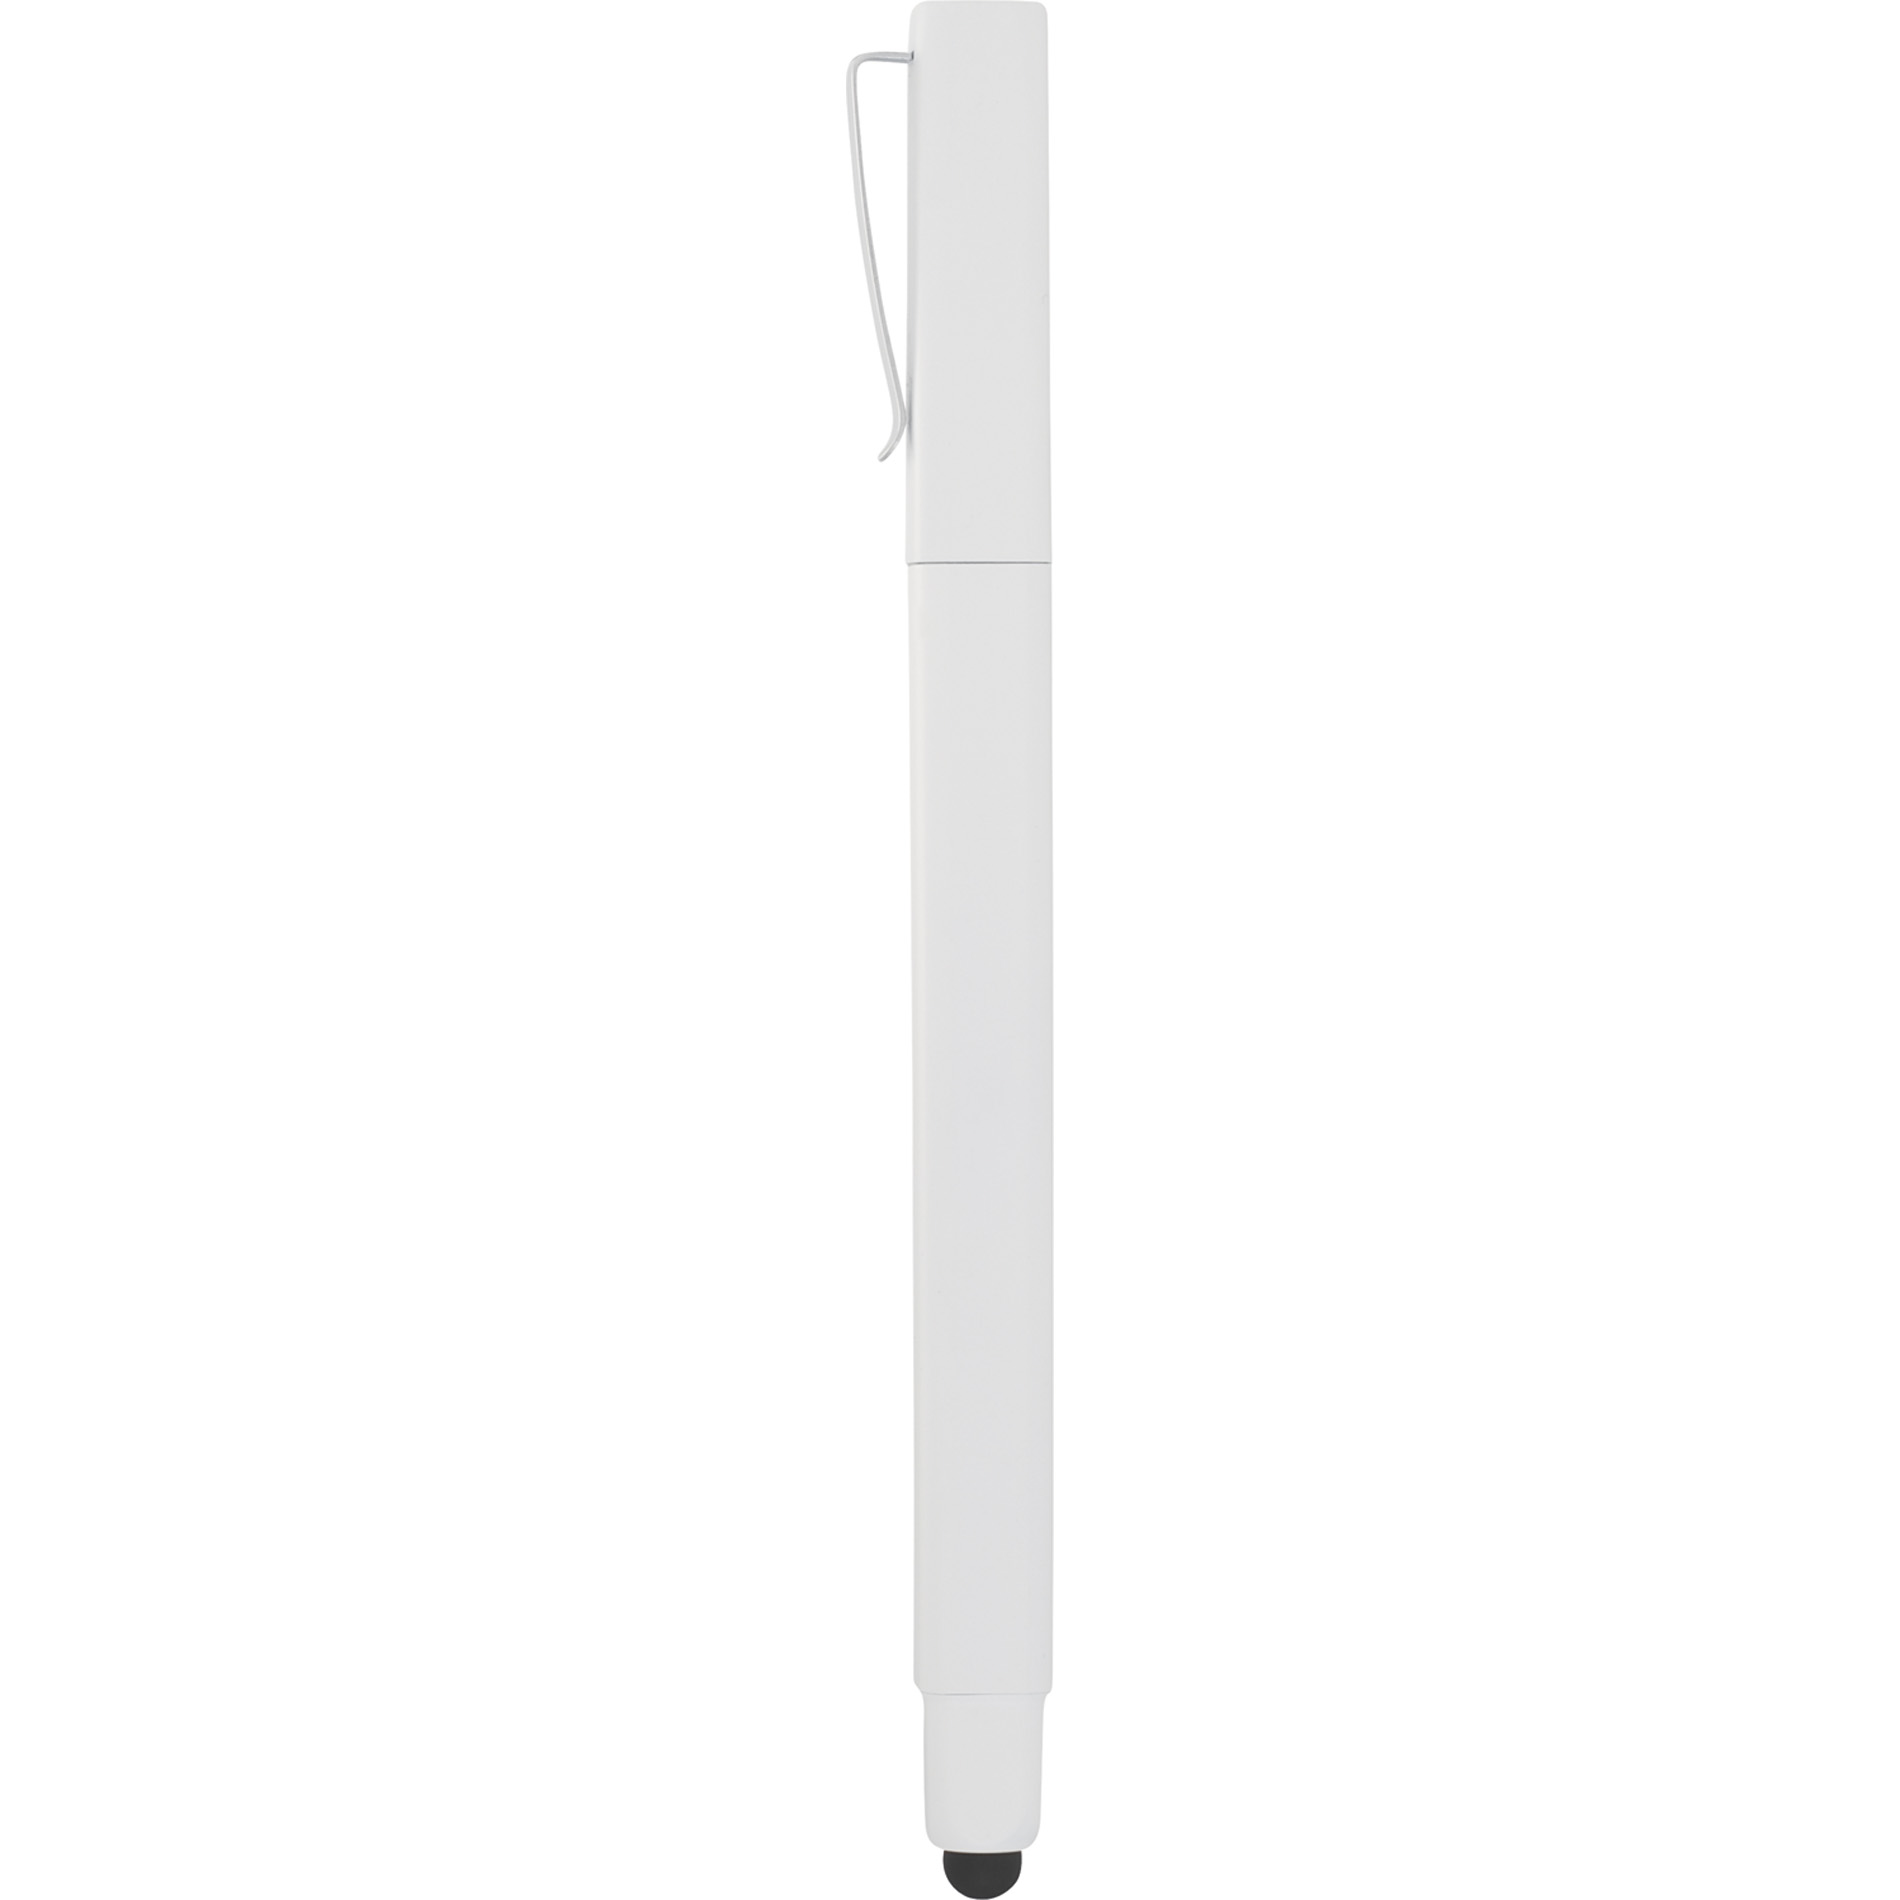 Promotional Ambassador Square Ballpoint Stylus Pens